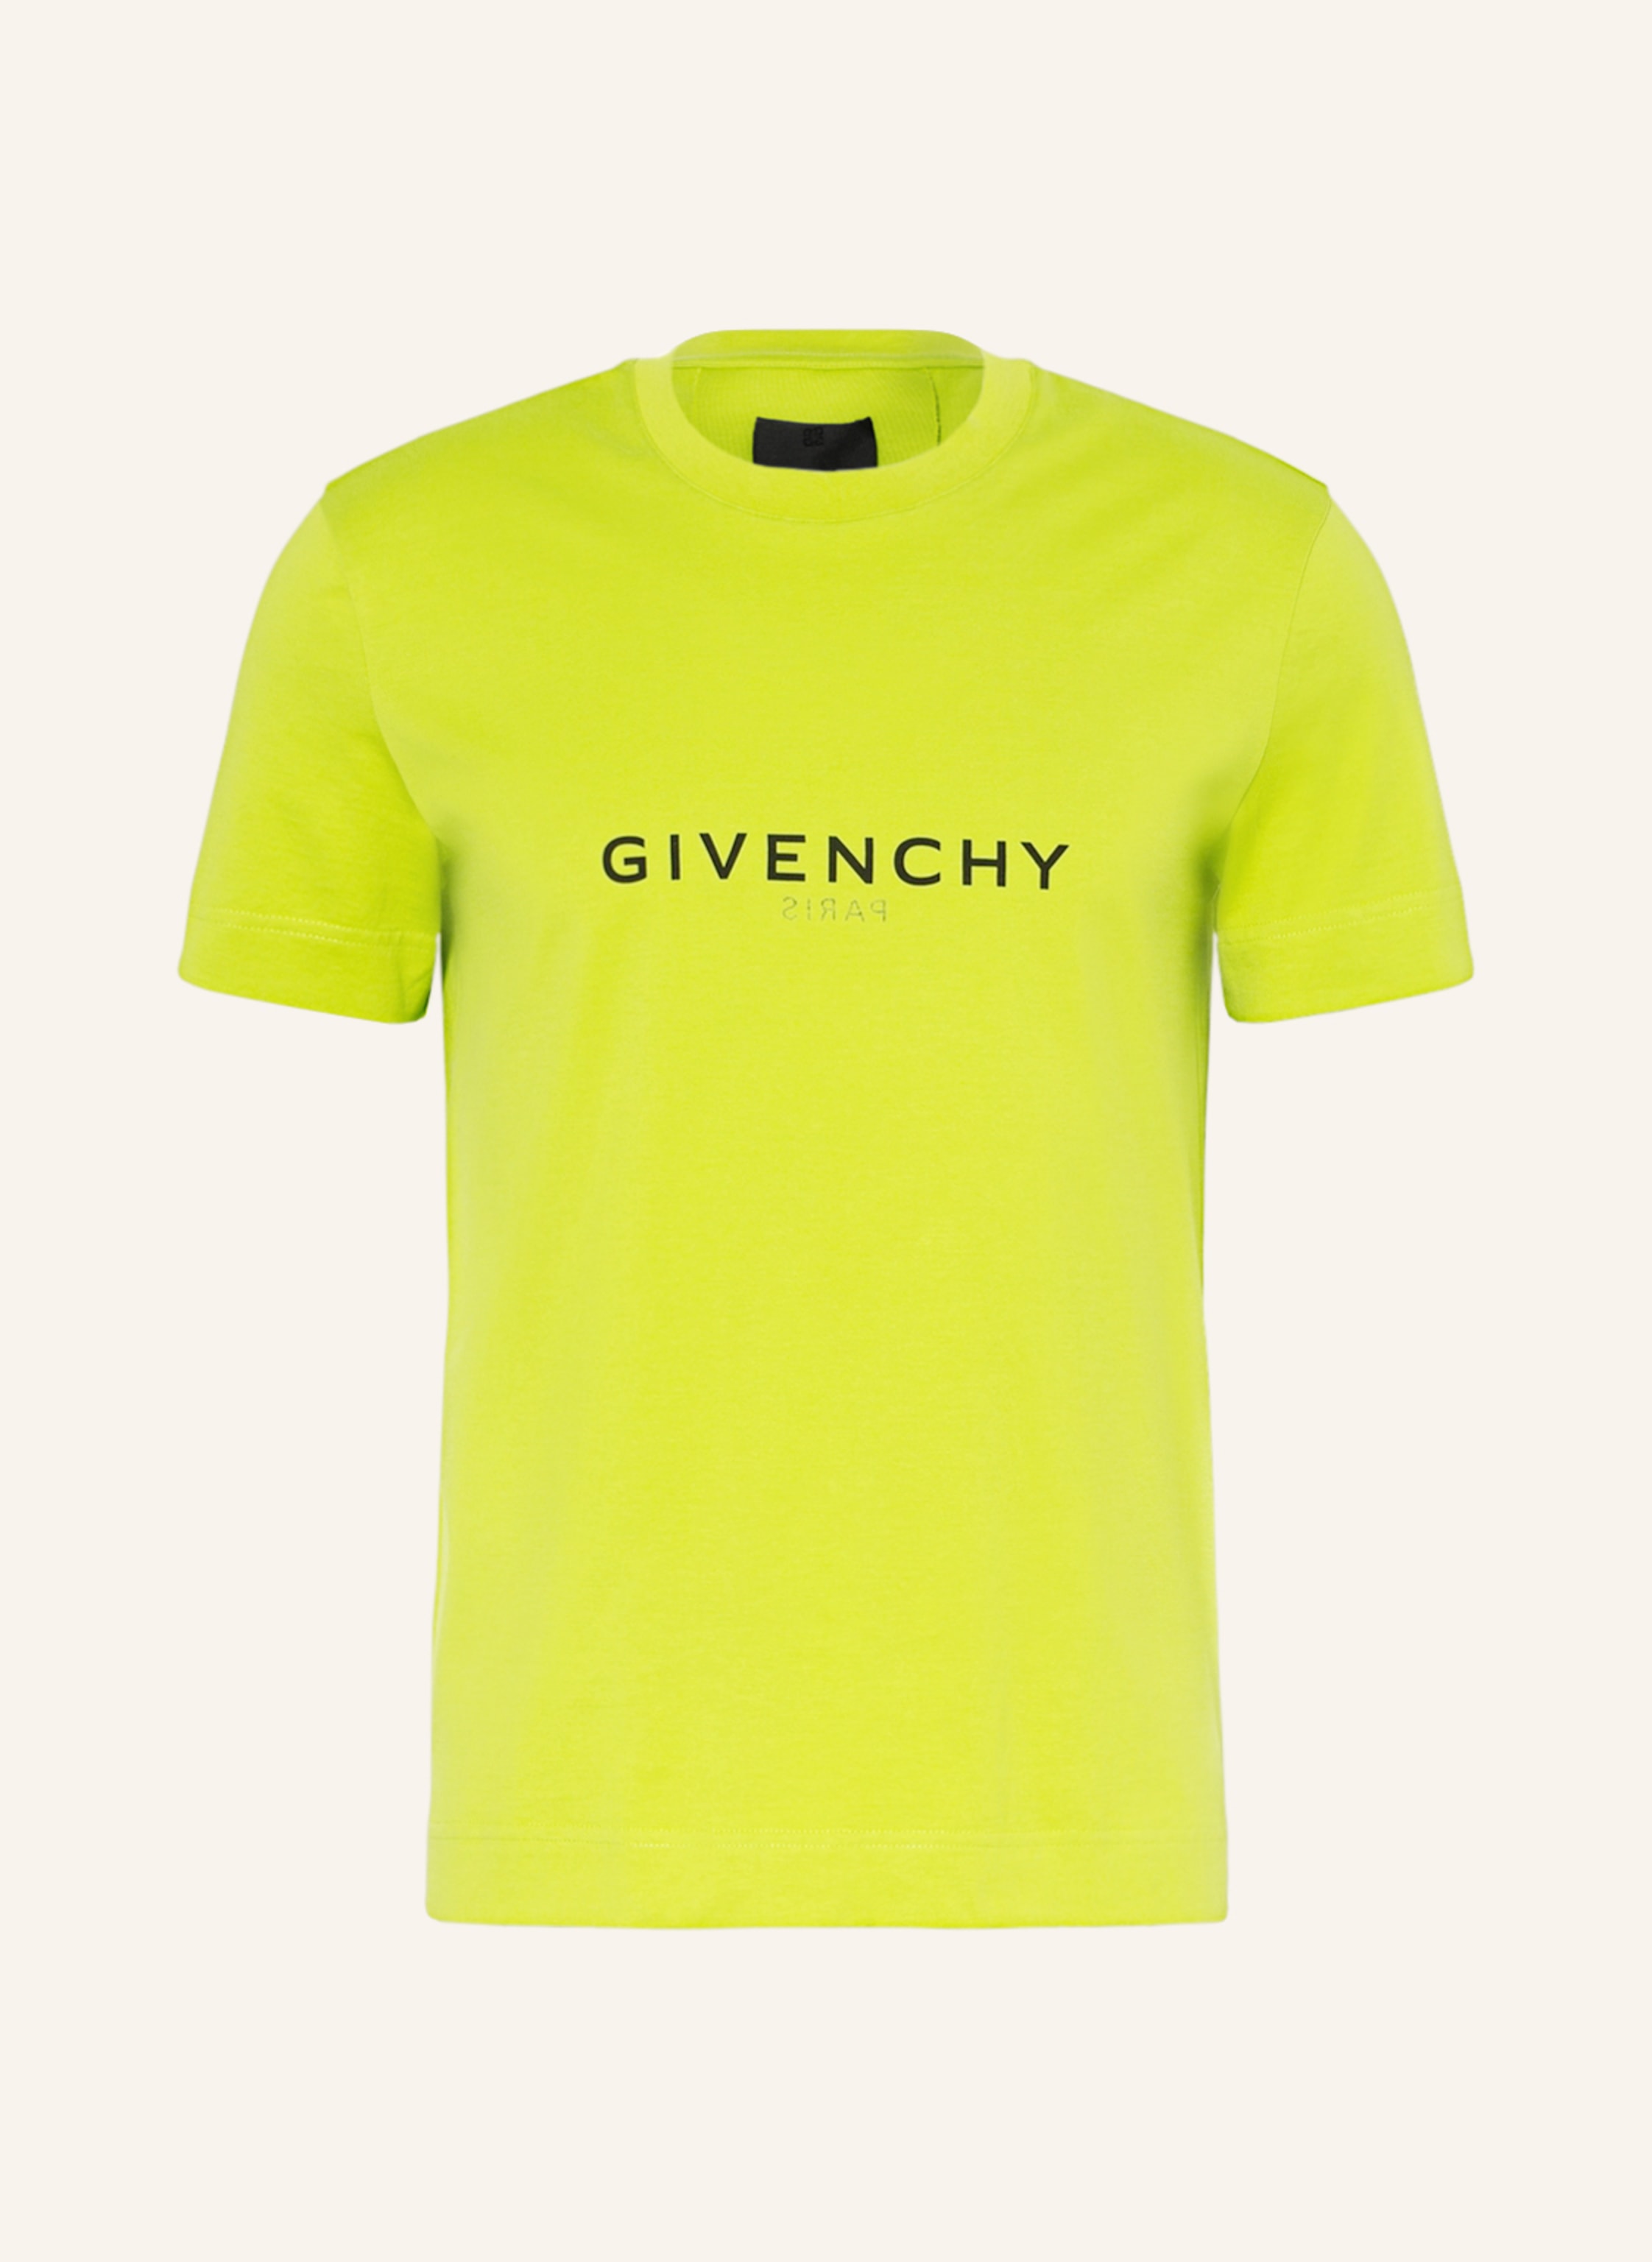 GIVENCHY T-shirt in light green | Breuninger